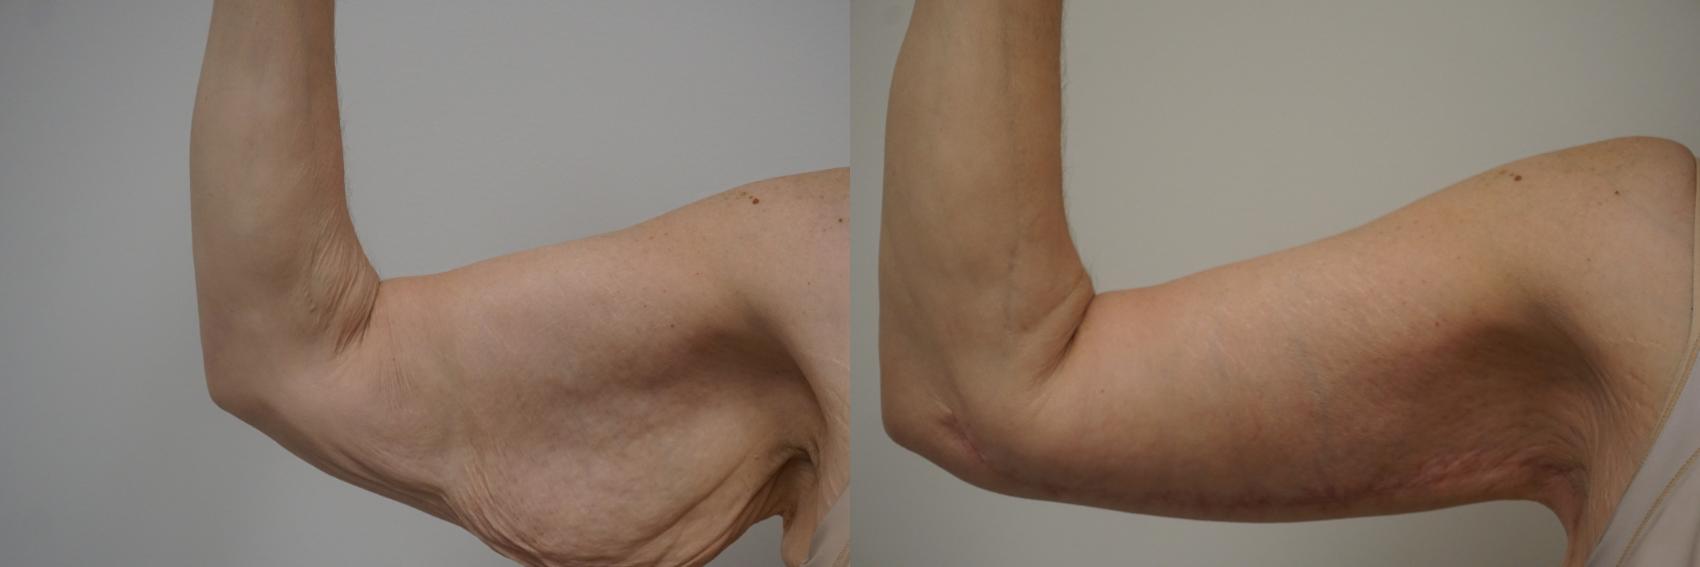 New Kao Plastic Surgery Innovation - Arm Lift - Circumaxillary Brachioplasty  - Tightens Skin On Arms - YouTube